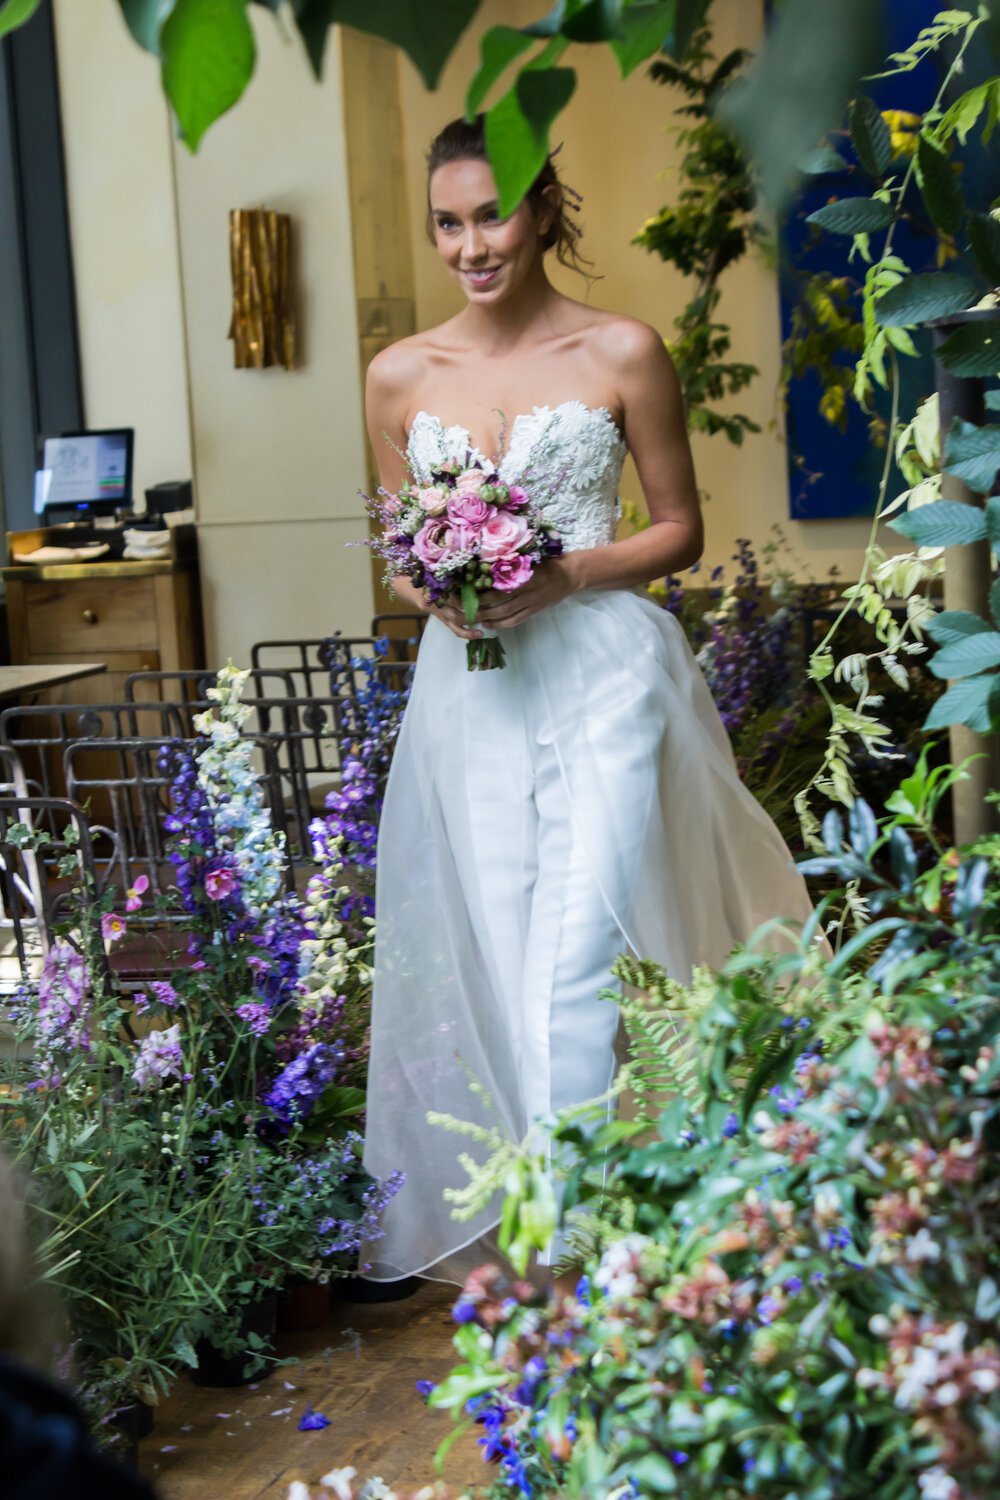 Halfpenny London behind the scenes at a Petersham Nurseries wedding photoshoot